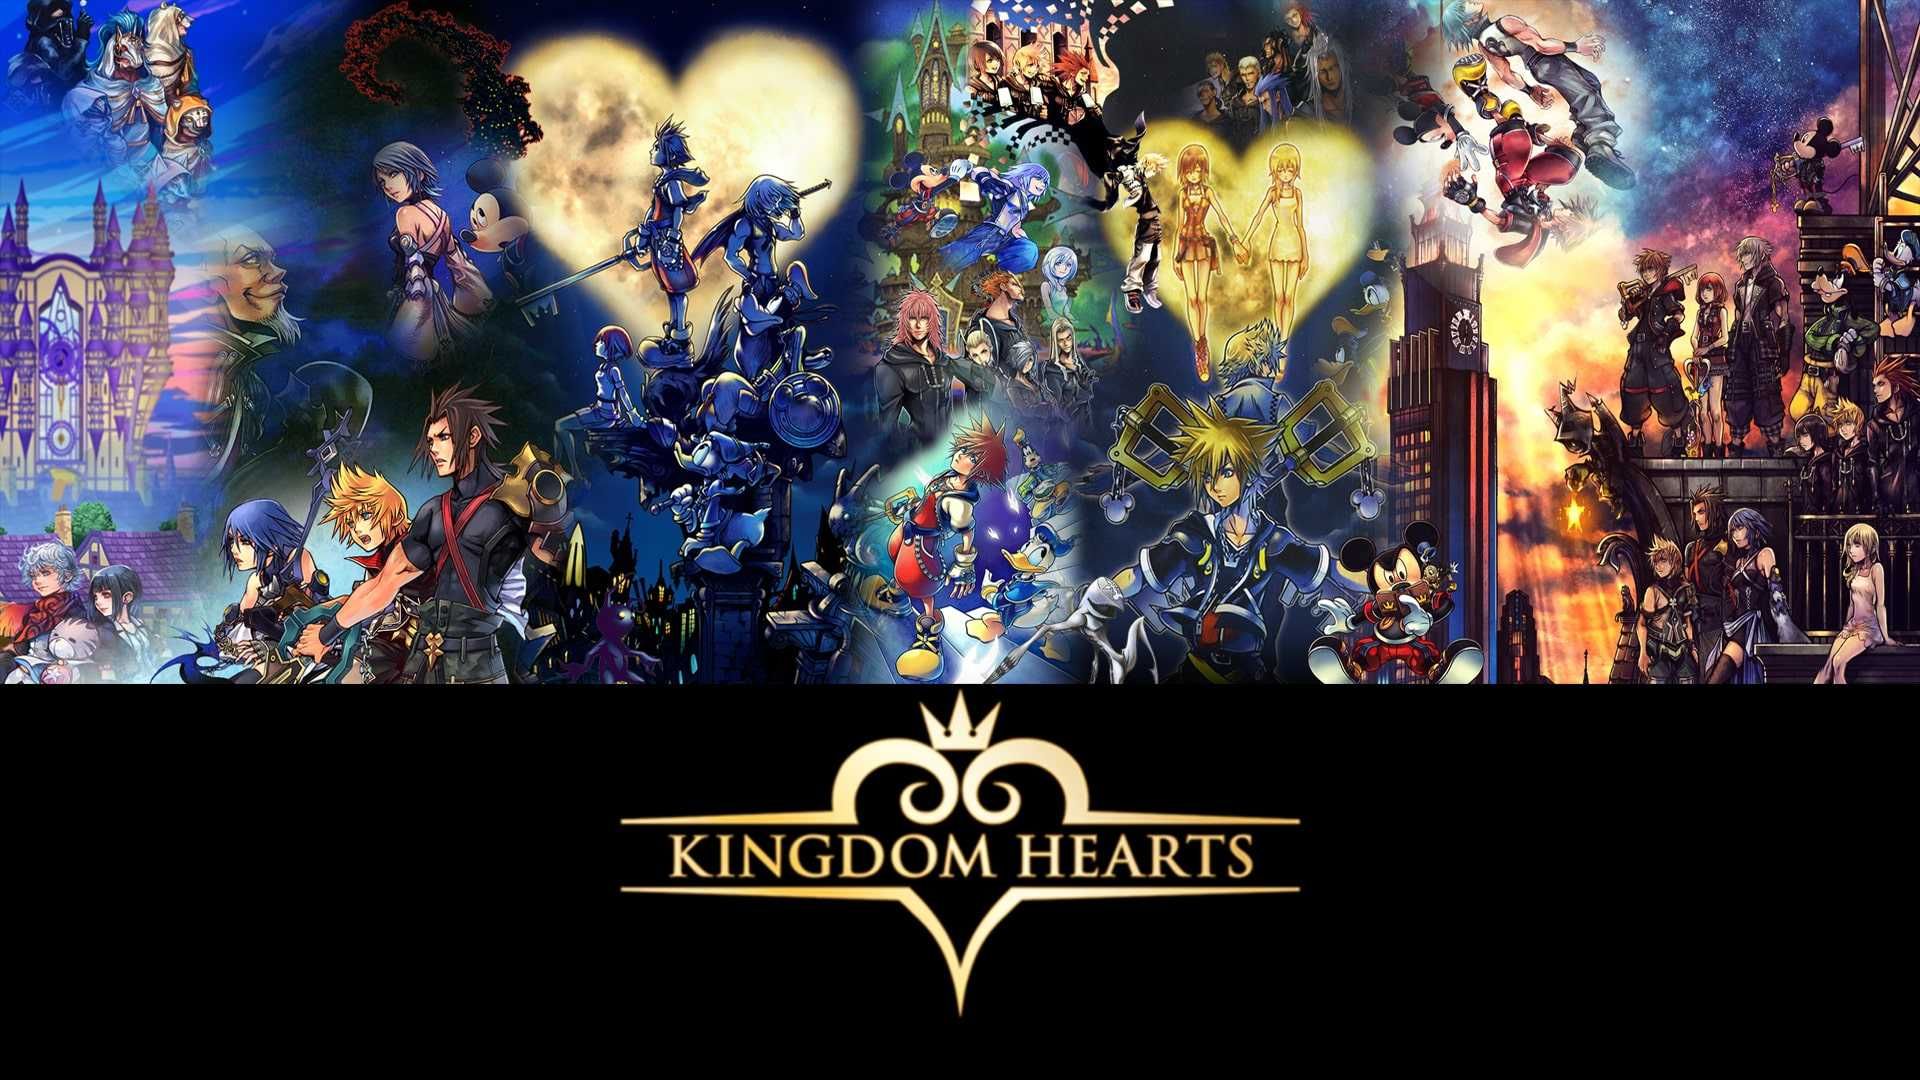 Kingdom Hearts Wallpapers On Wallpaperdog